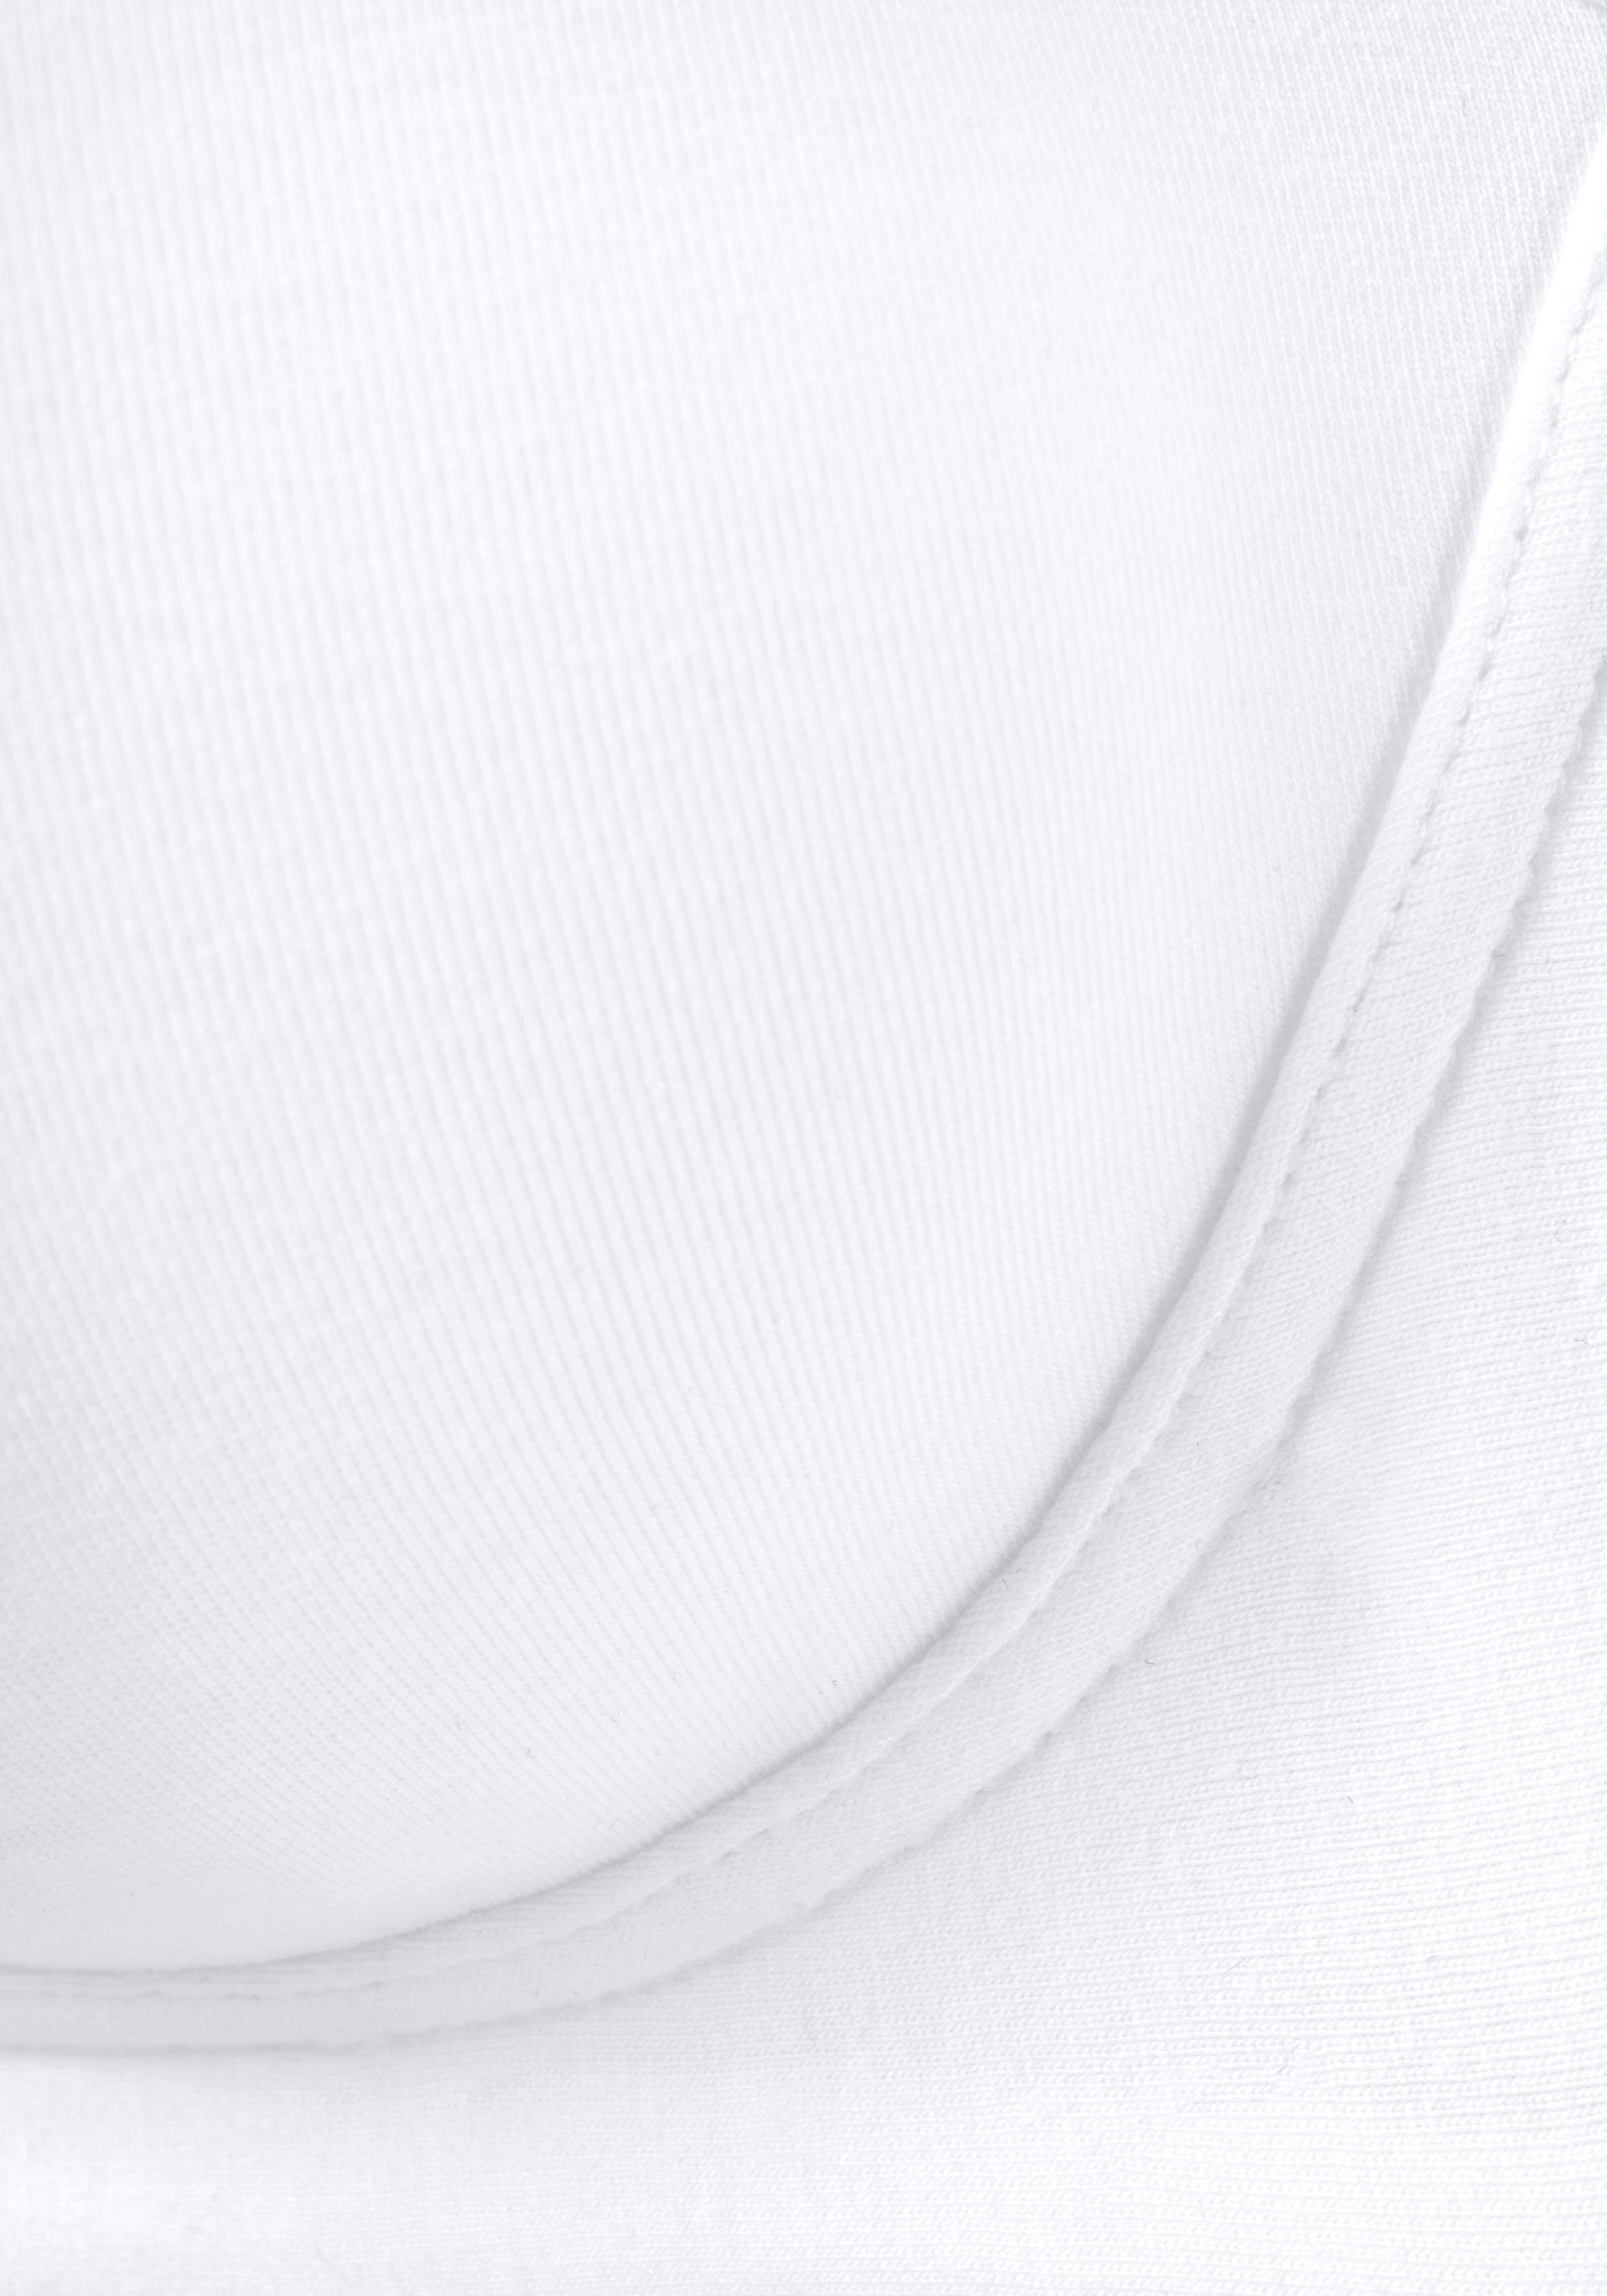 (Packung, Stück) mint+weiß fleur petite Dessous 2 T-Shirt-BH Basic aus ohne Bügel Baumwolle,